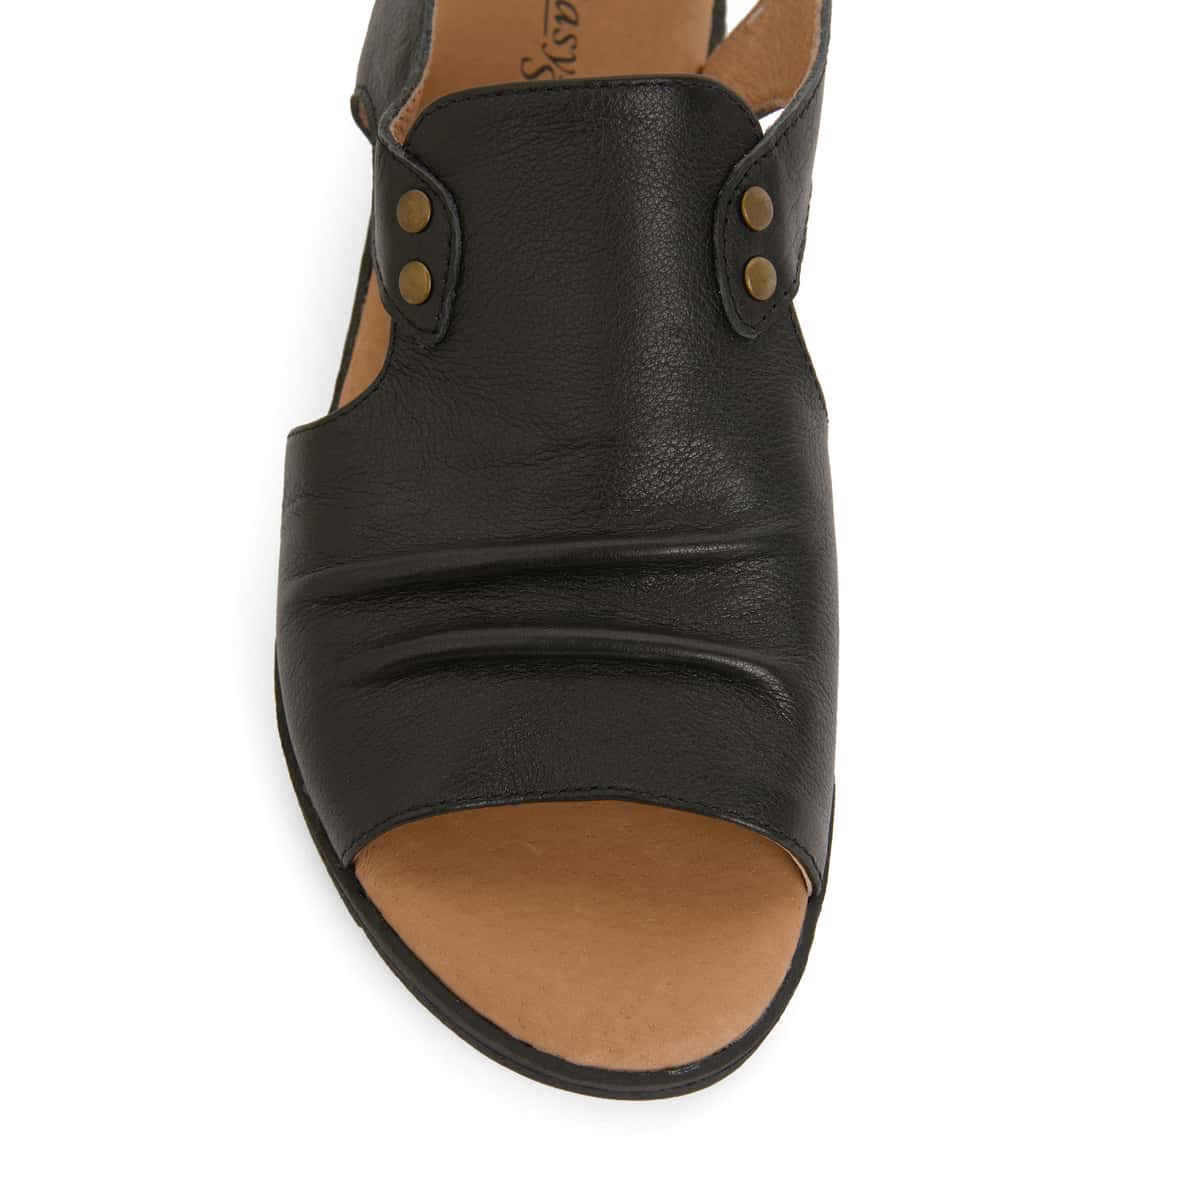 Gelato Sandal in Black Leather